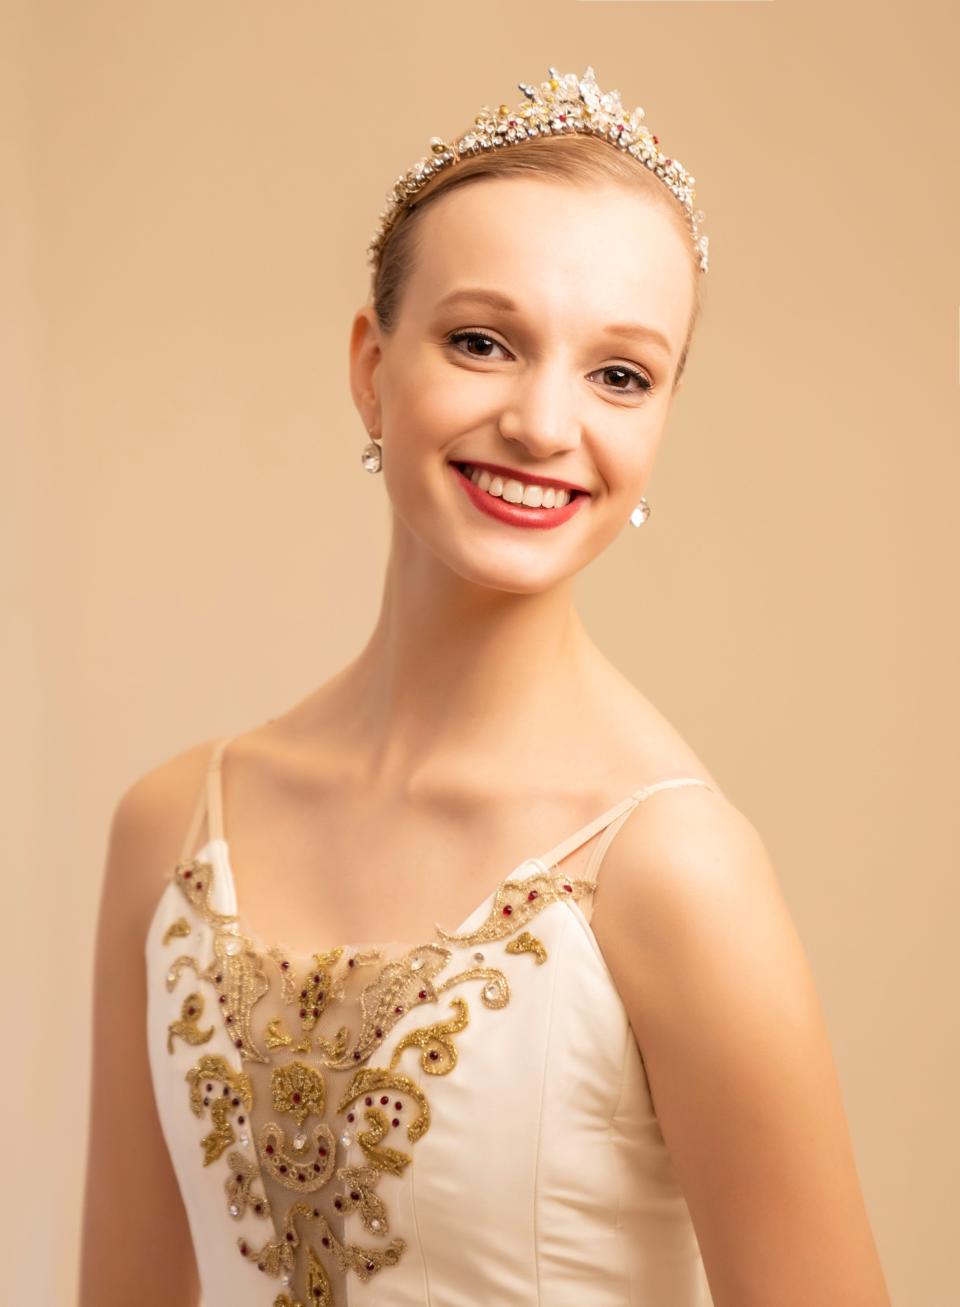 Jennifer Hackbarth joins The Sarasota Ballet as principal dancer in the 2023-24 season.